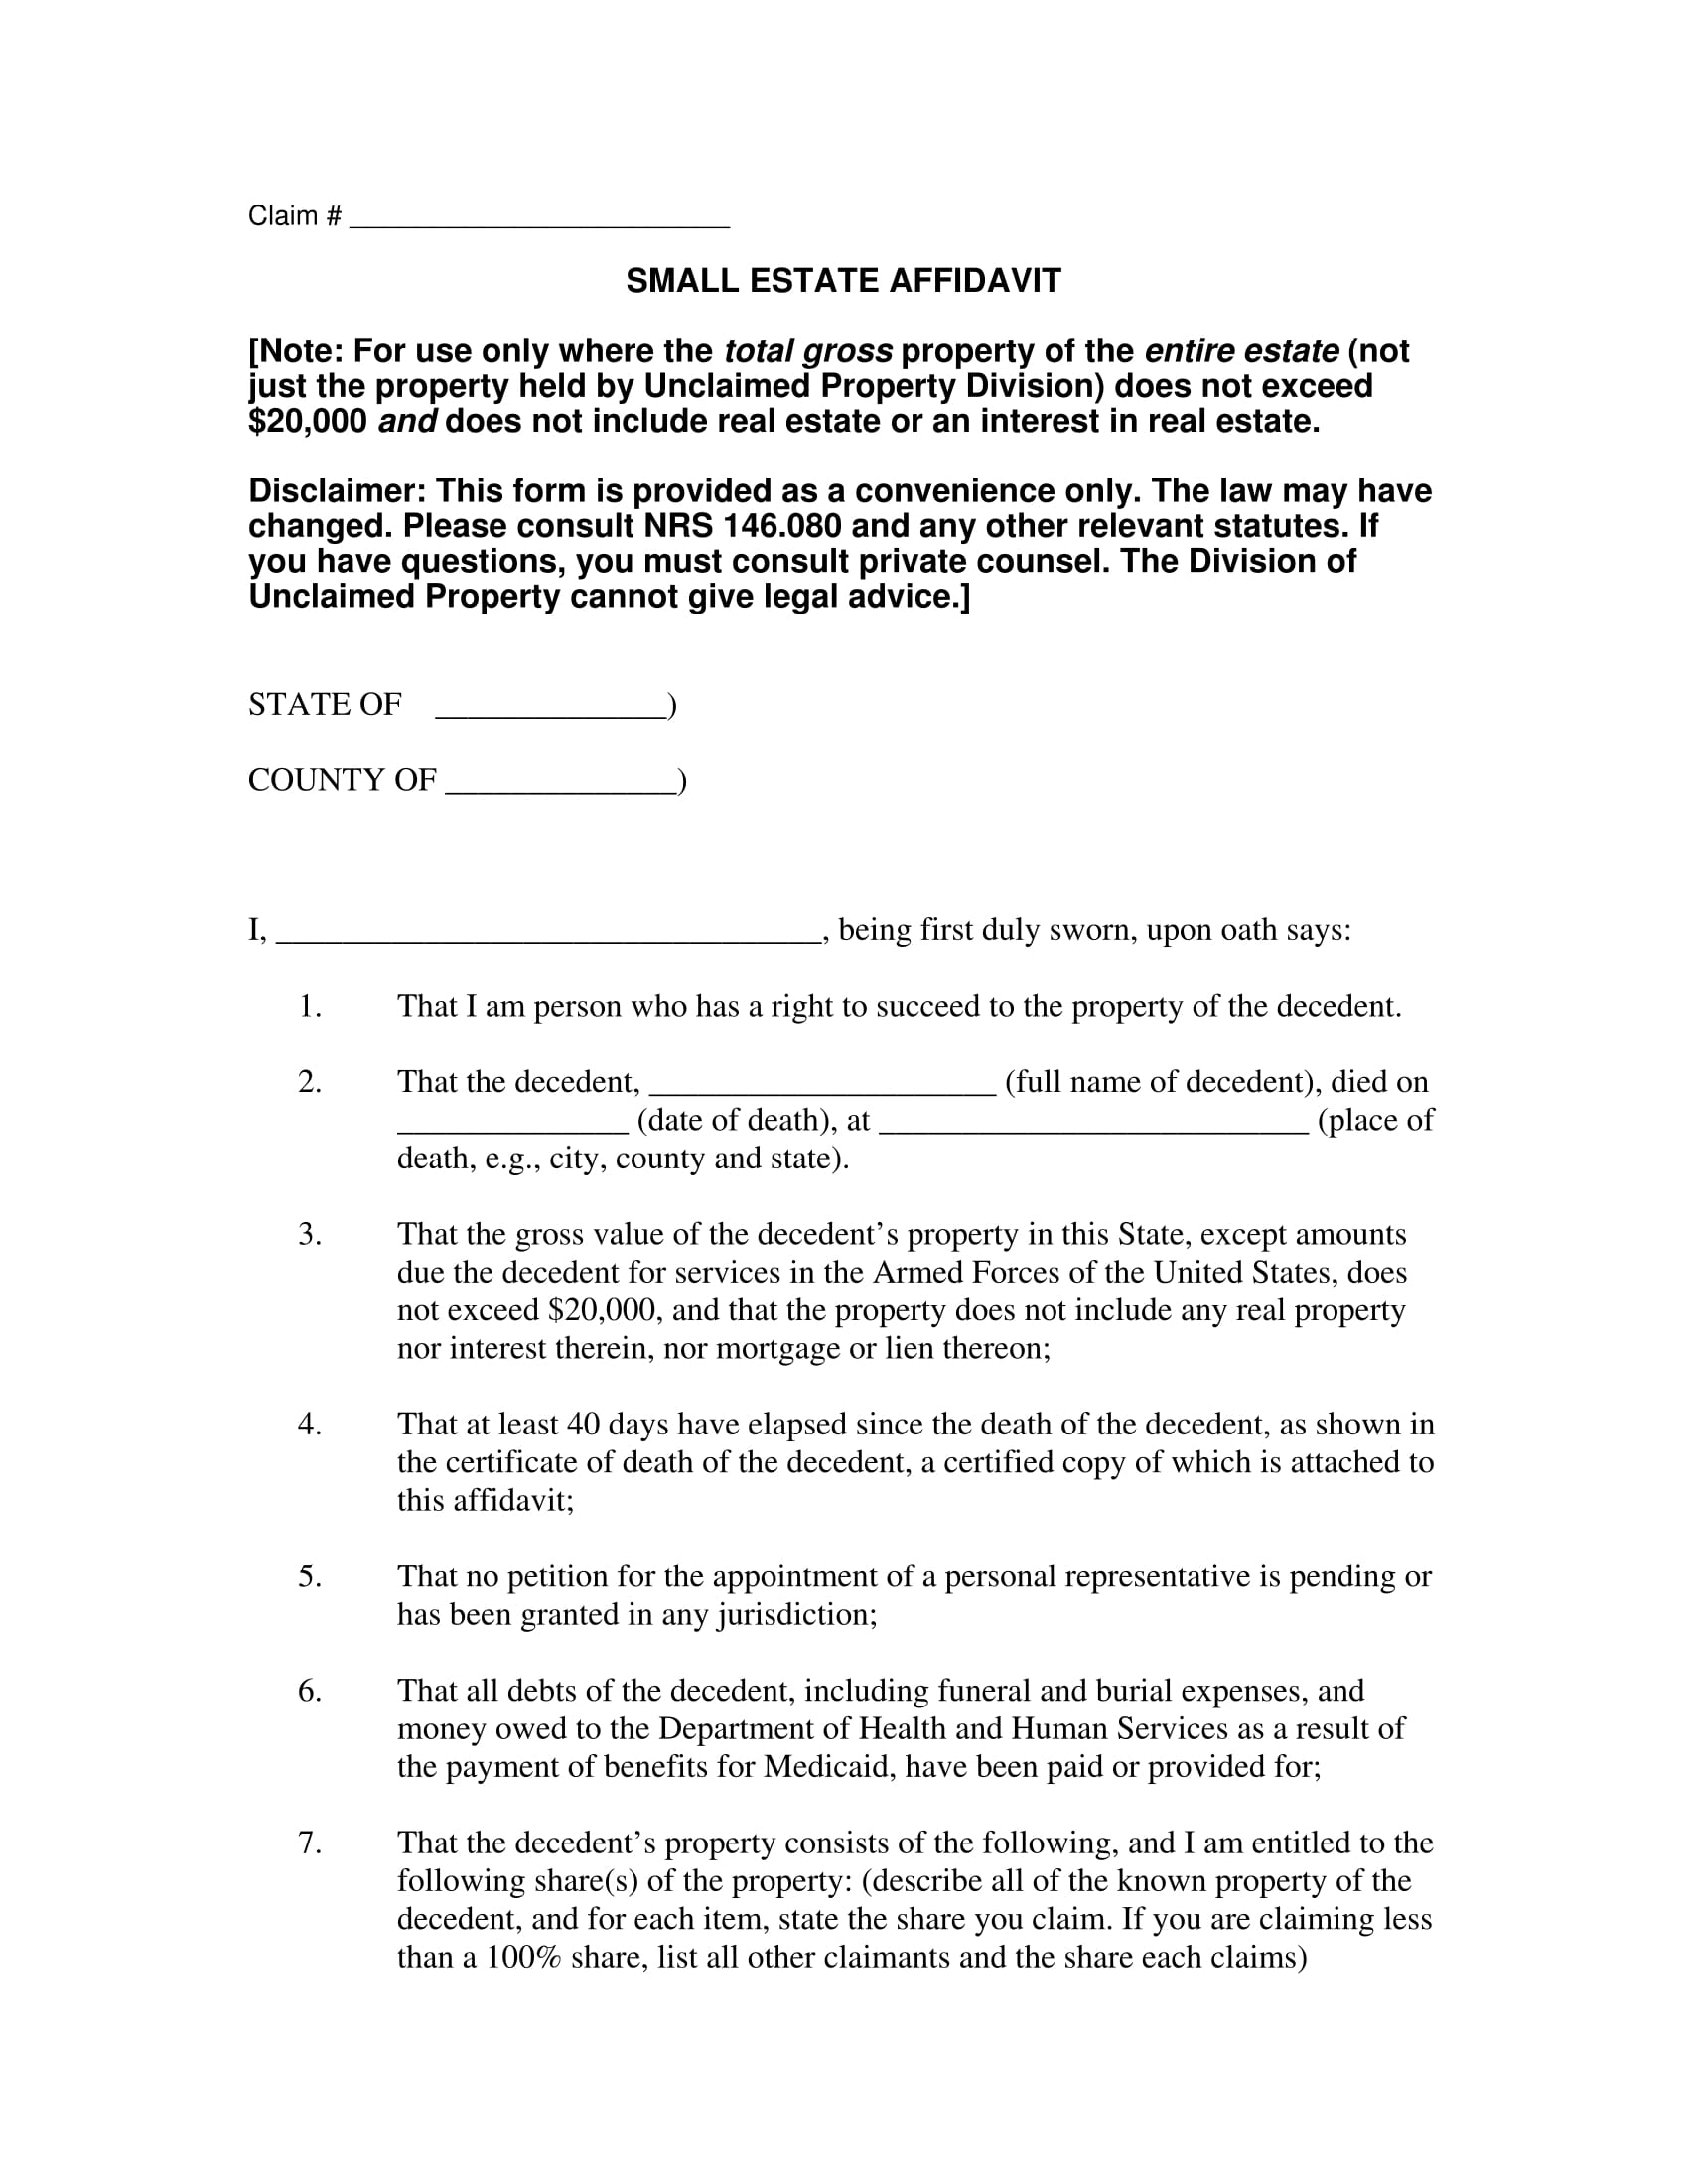 small estate claim affidavit form 1